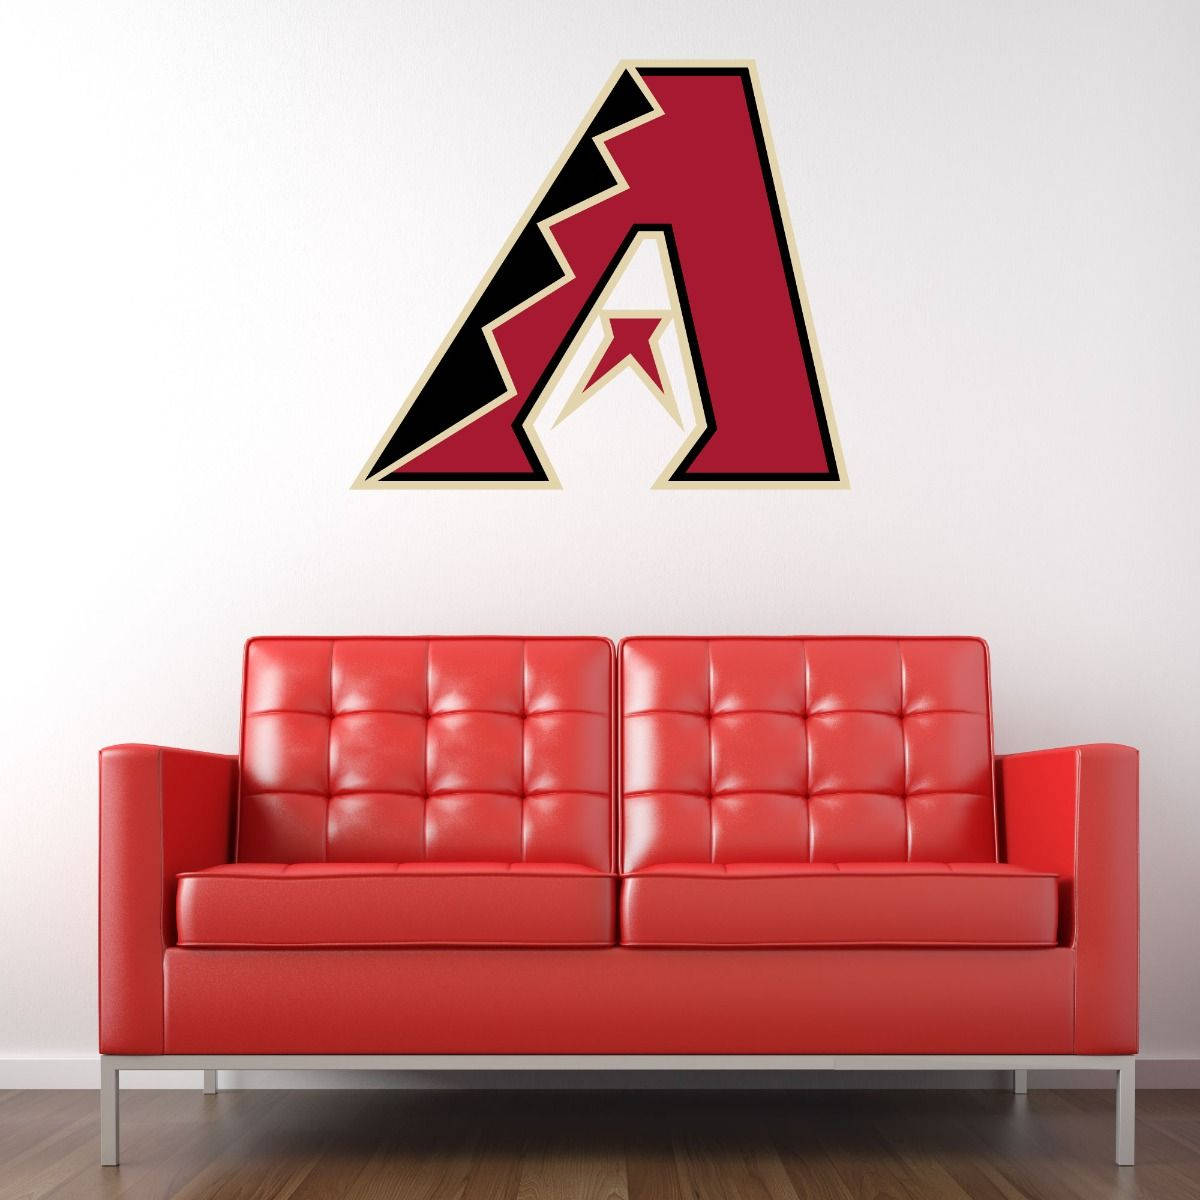 Arizona Diamondbacks With Red Sofa Wallpaper